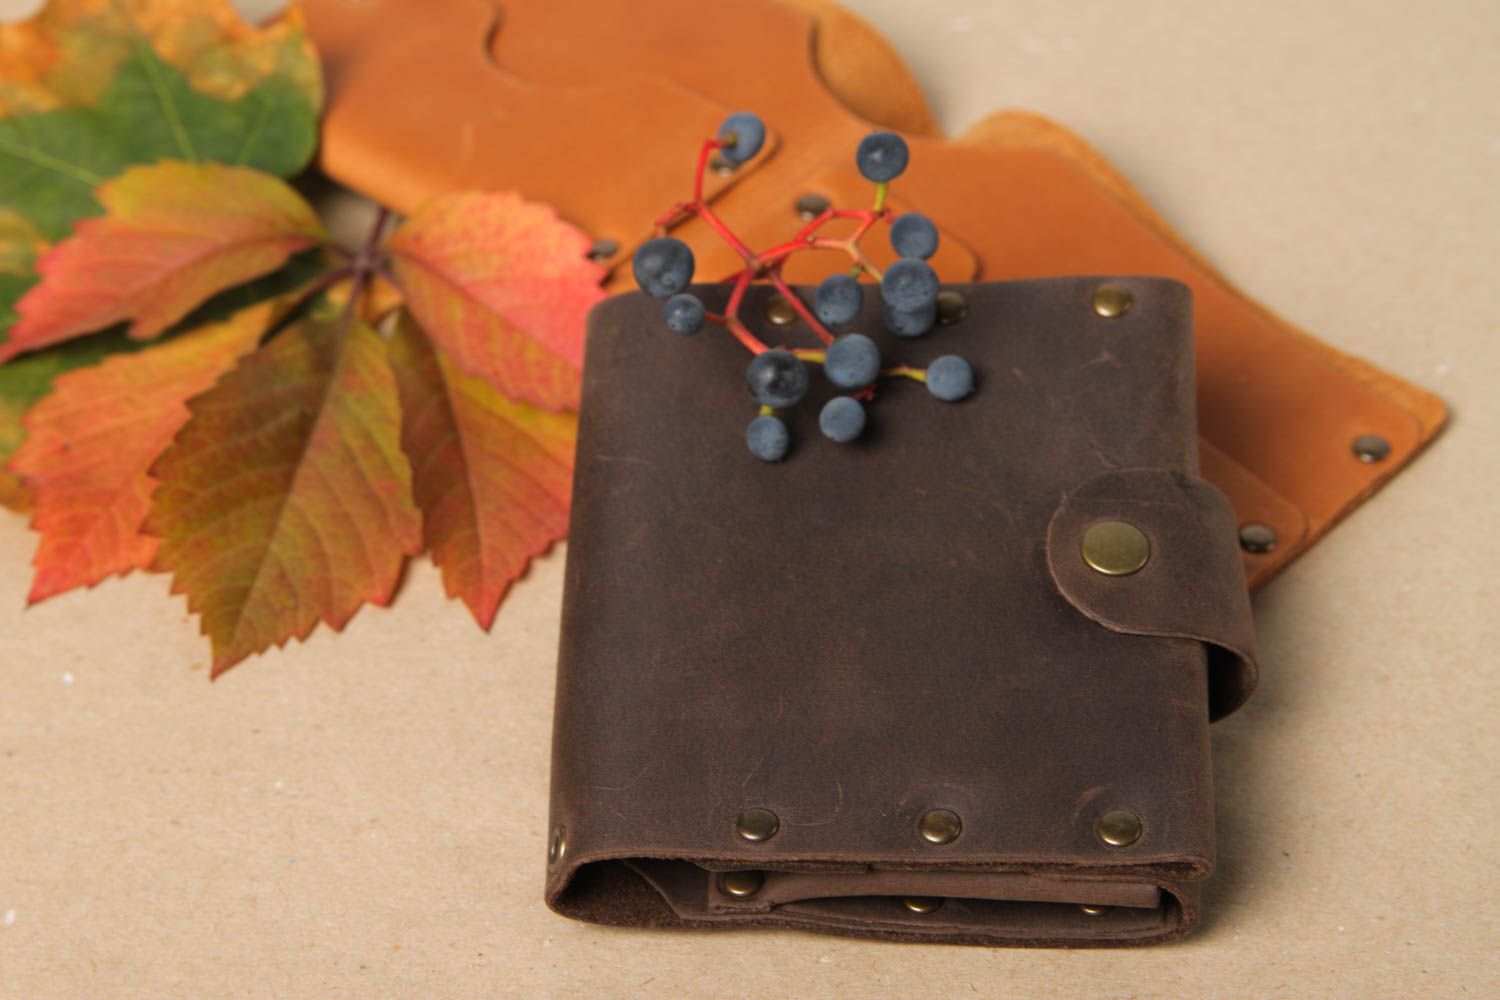 Stylish handmade leather purse designer accessories leather goods gift ideas photo 1